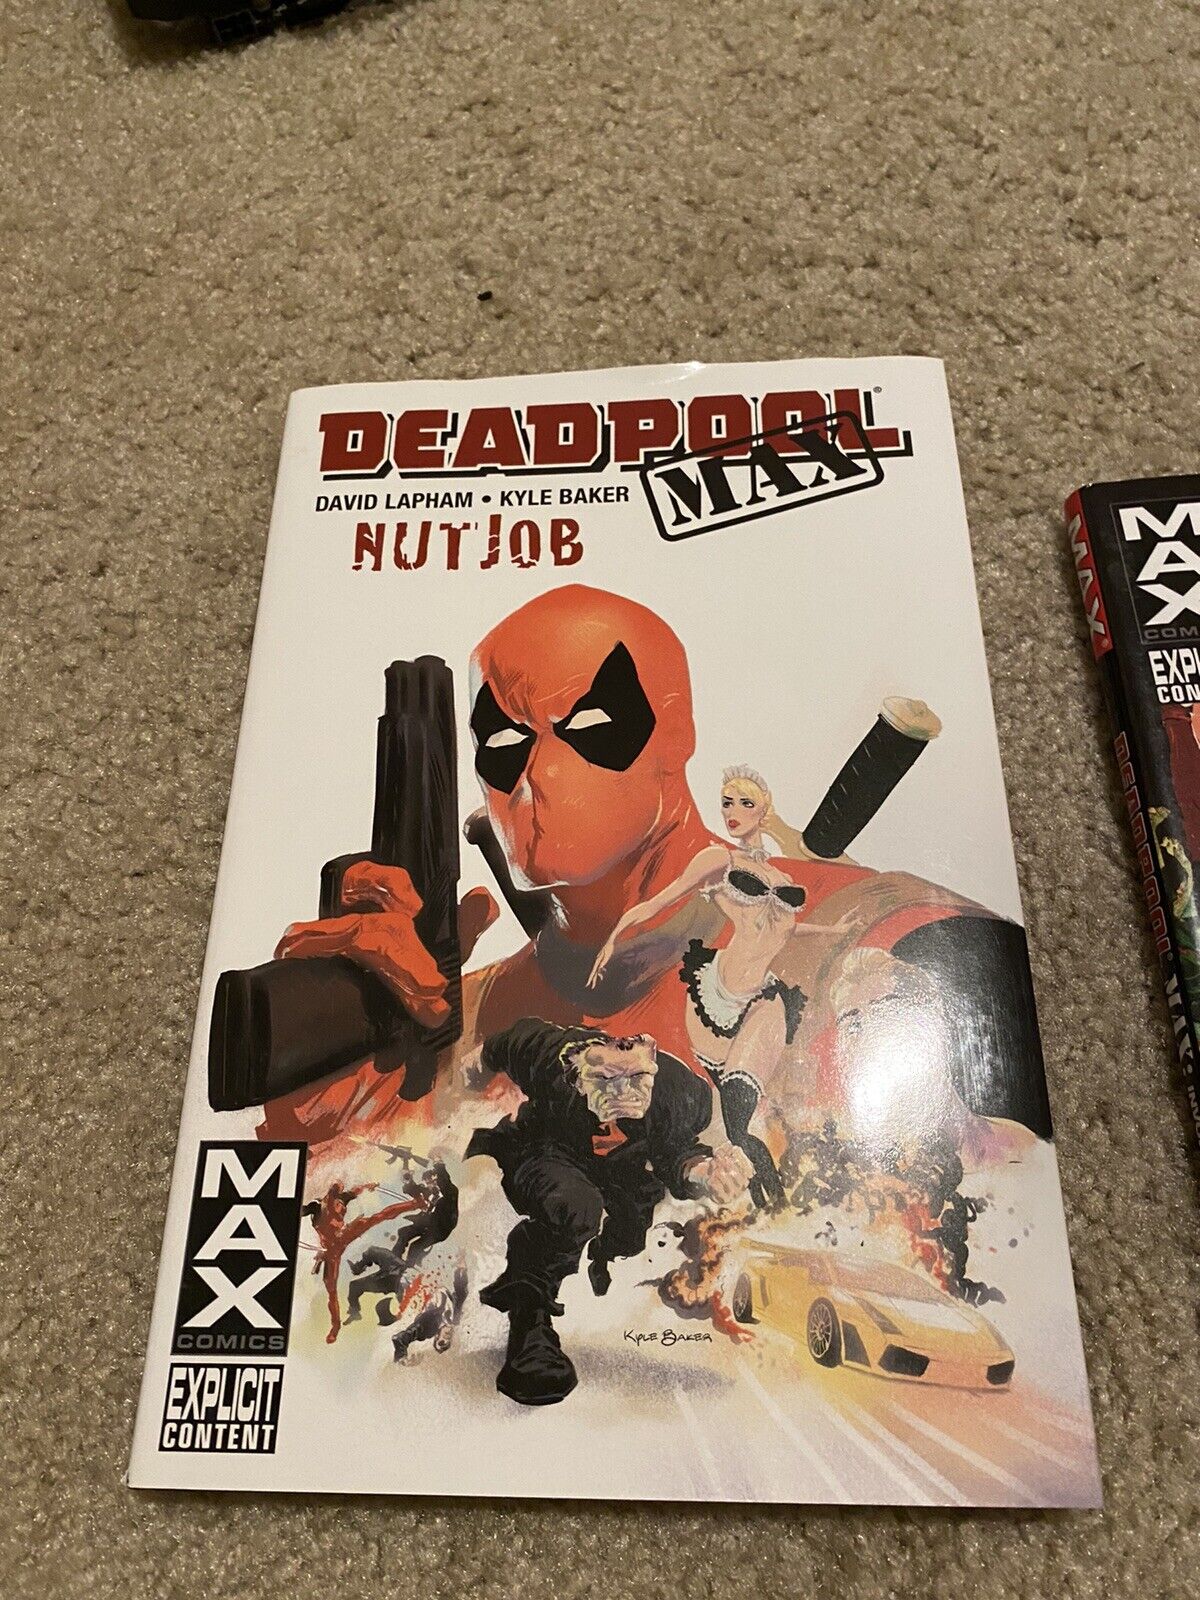 Deadpool MAX Deluxe Hardcover HC (Nut Job Second Cut Lapham Kyle Baker X-Men)